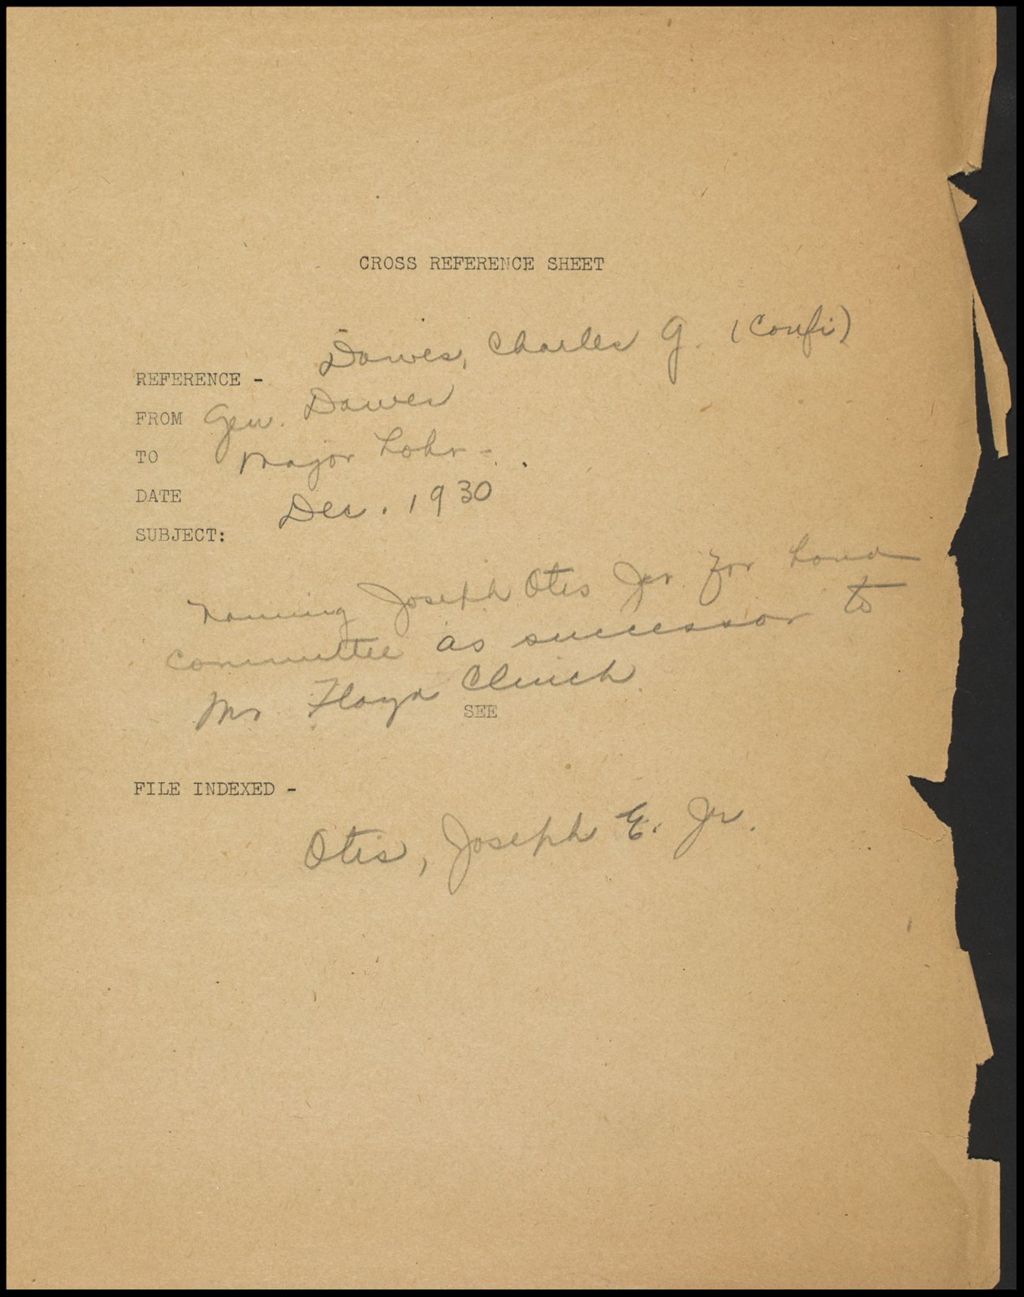 Danes, Charles G., correspondence, May - December, 1930 (Folder 9-25)